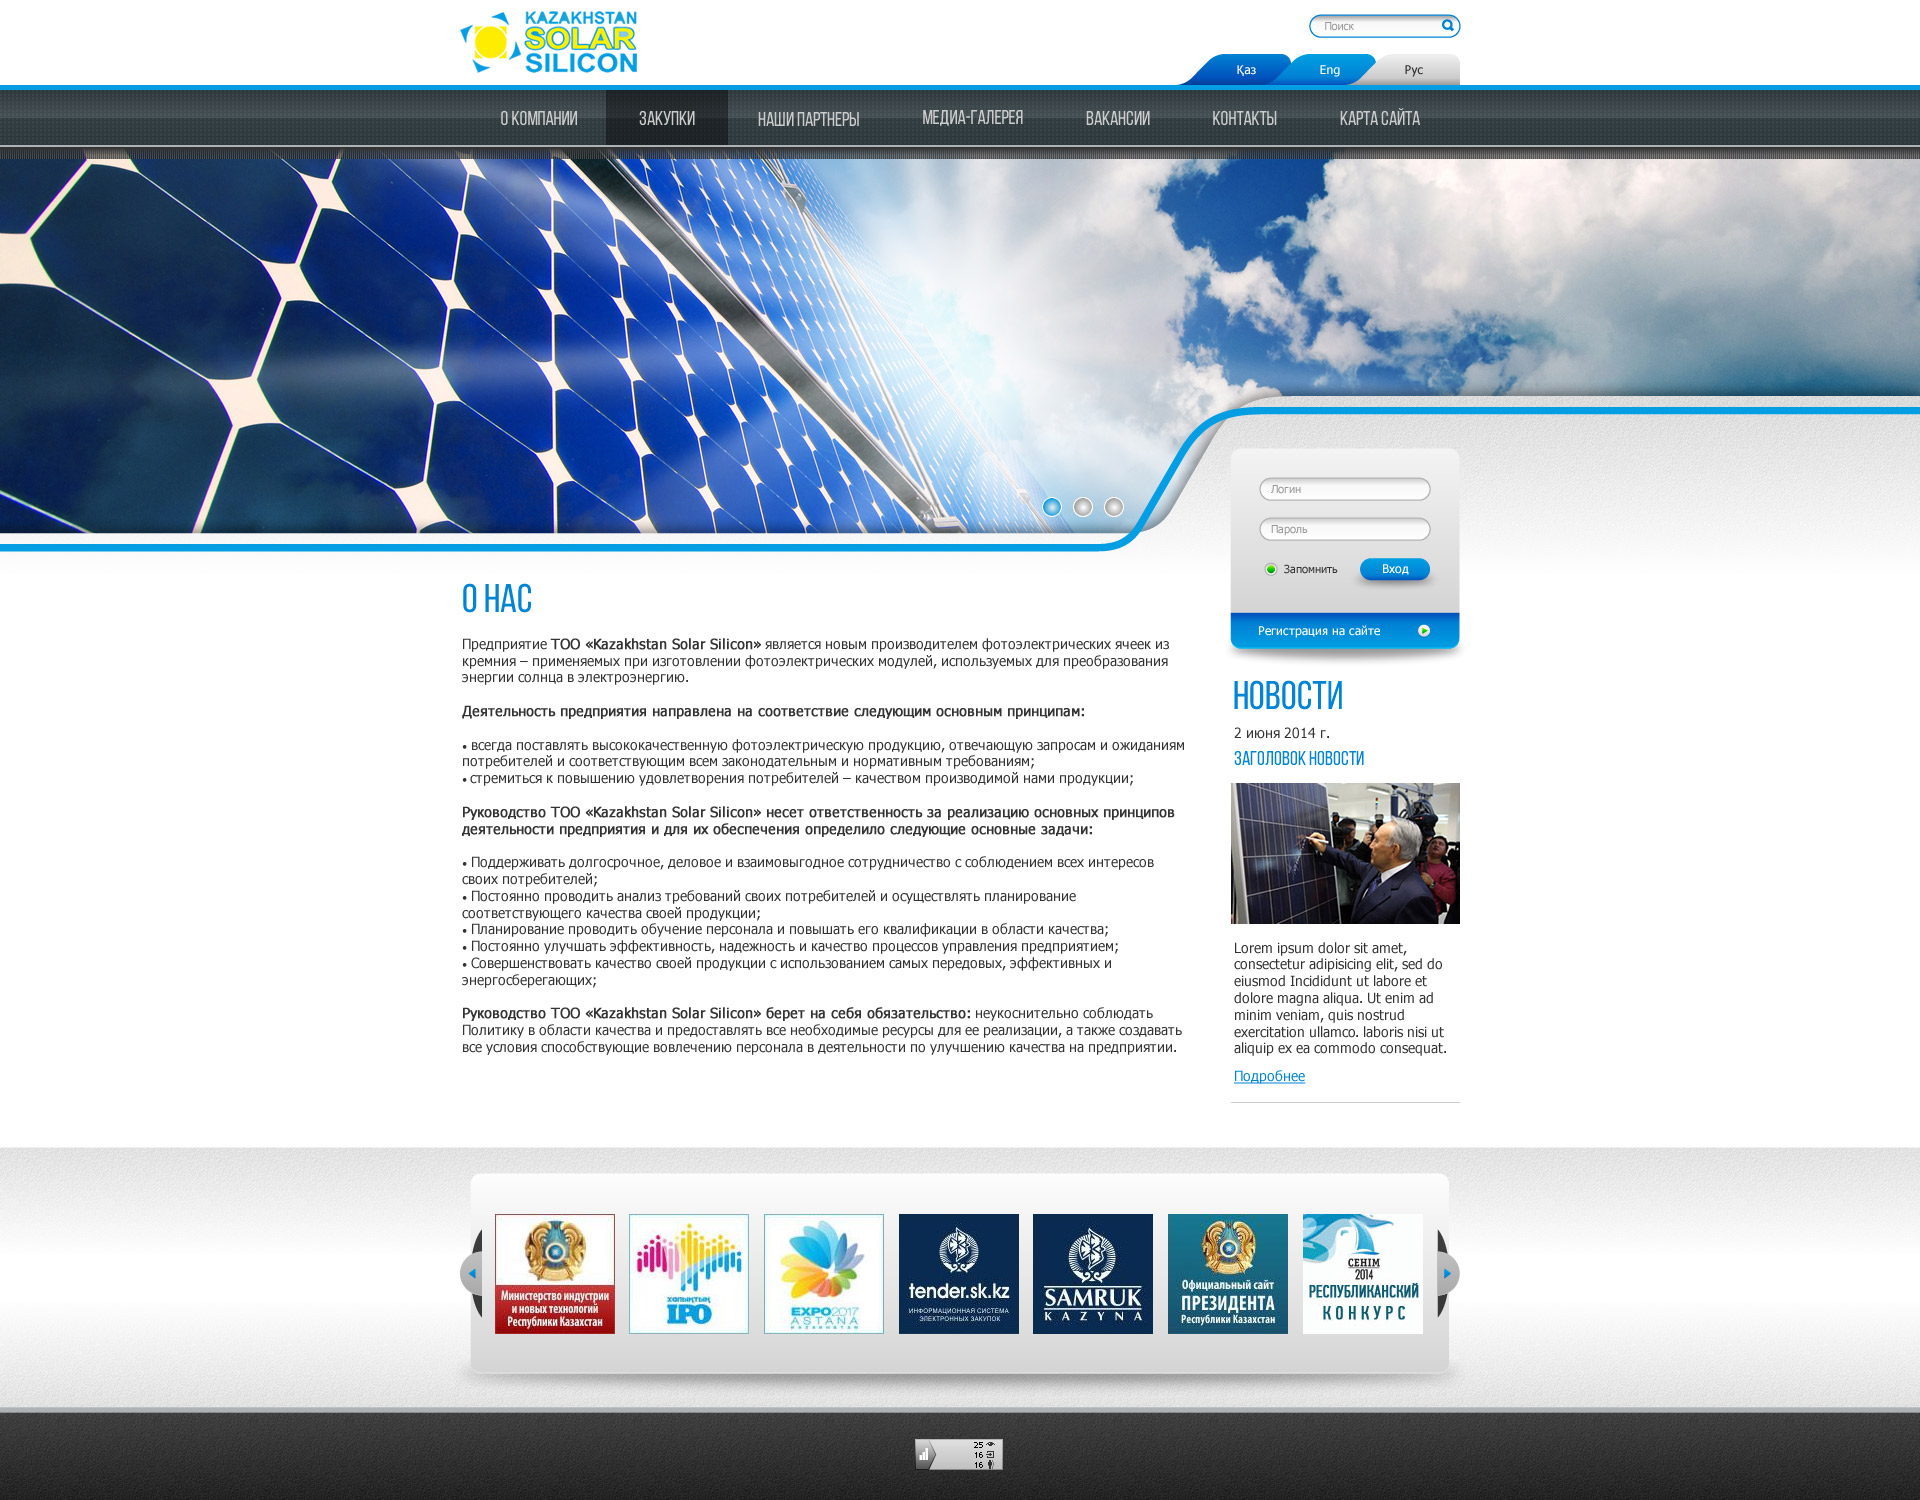 Kazakhstan-Solar-Silicon.jpg